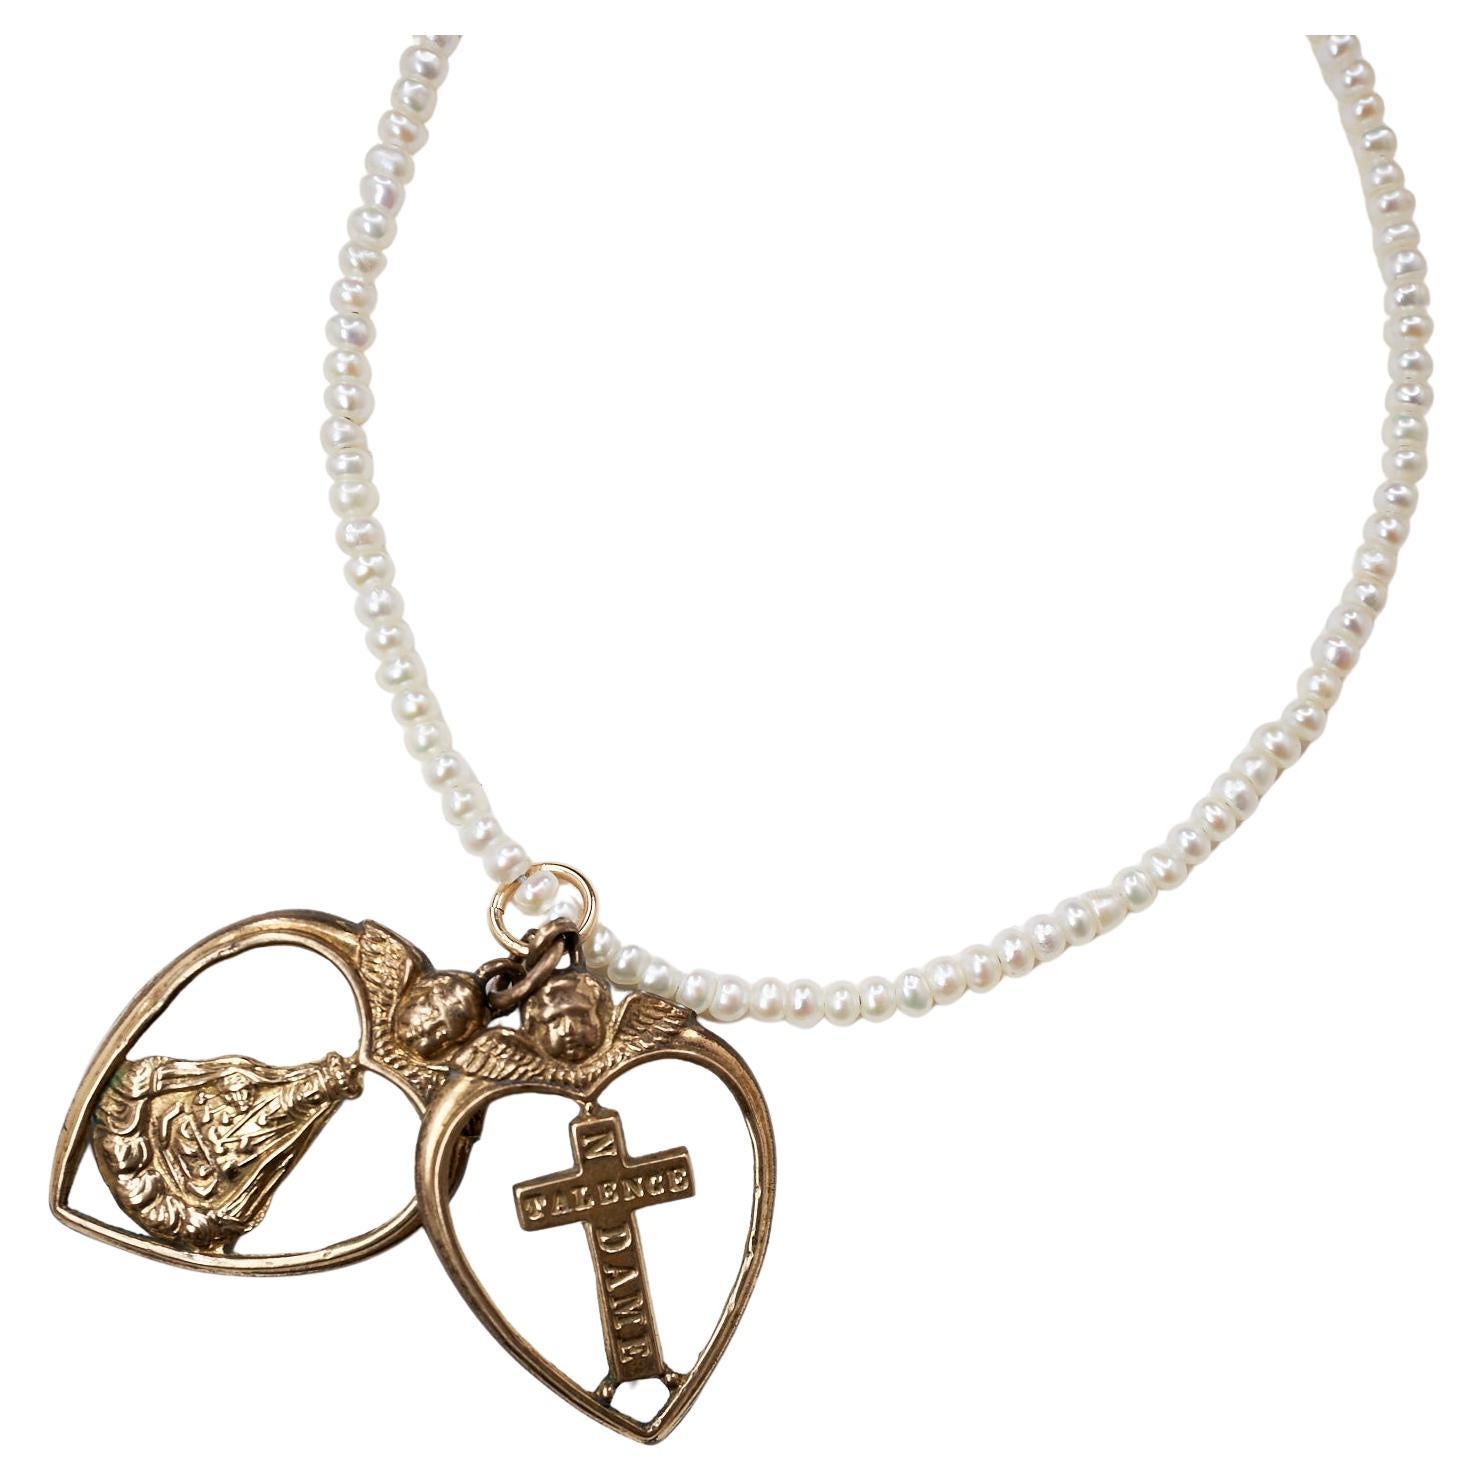 Heart Angel Cross Rosario Spiritual Religious White Pearl Tanzanite Necklace
Lenght: 16